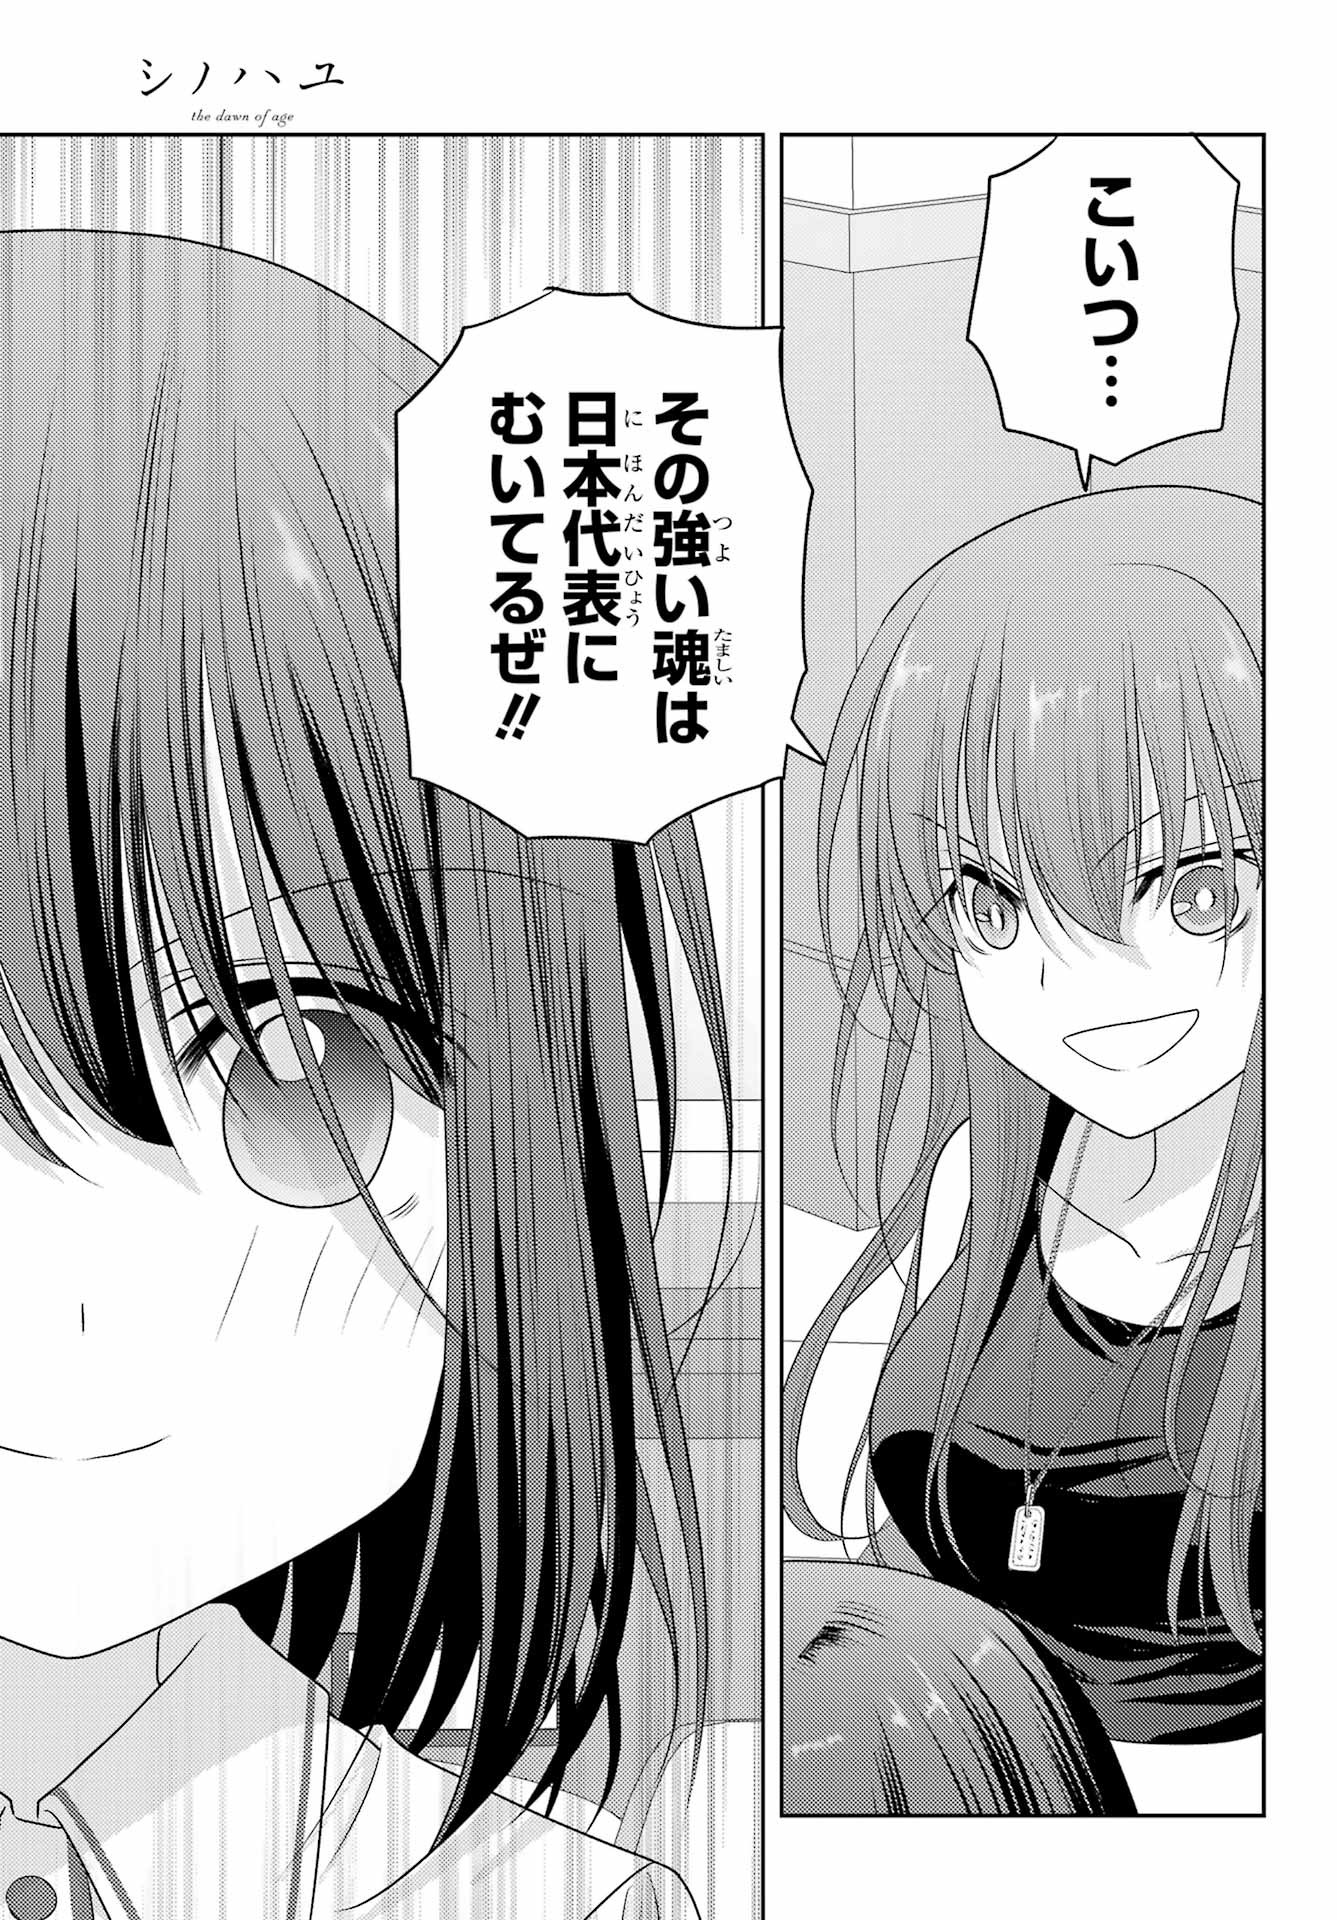 Shinohayu - The Dawn of Age Manga - Chapter 103-2 - Page 19